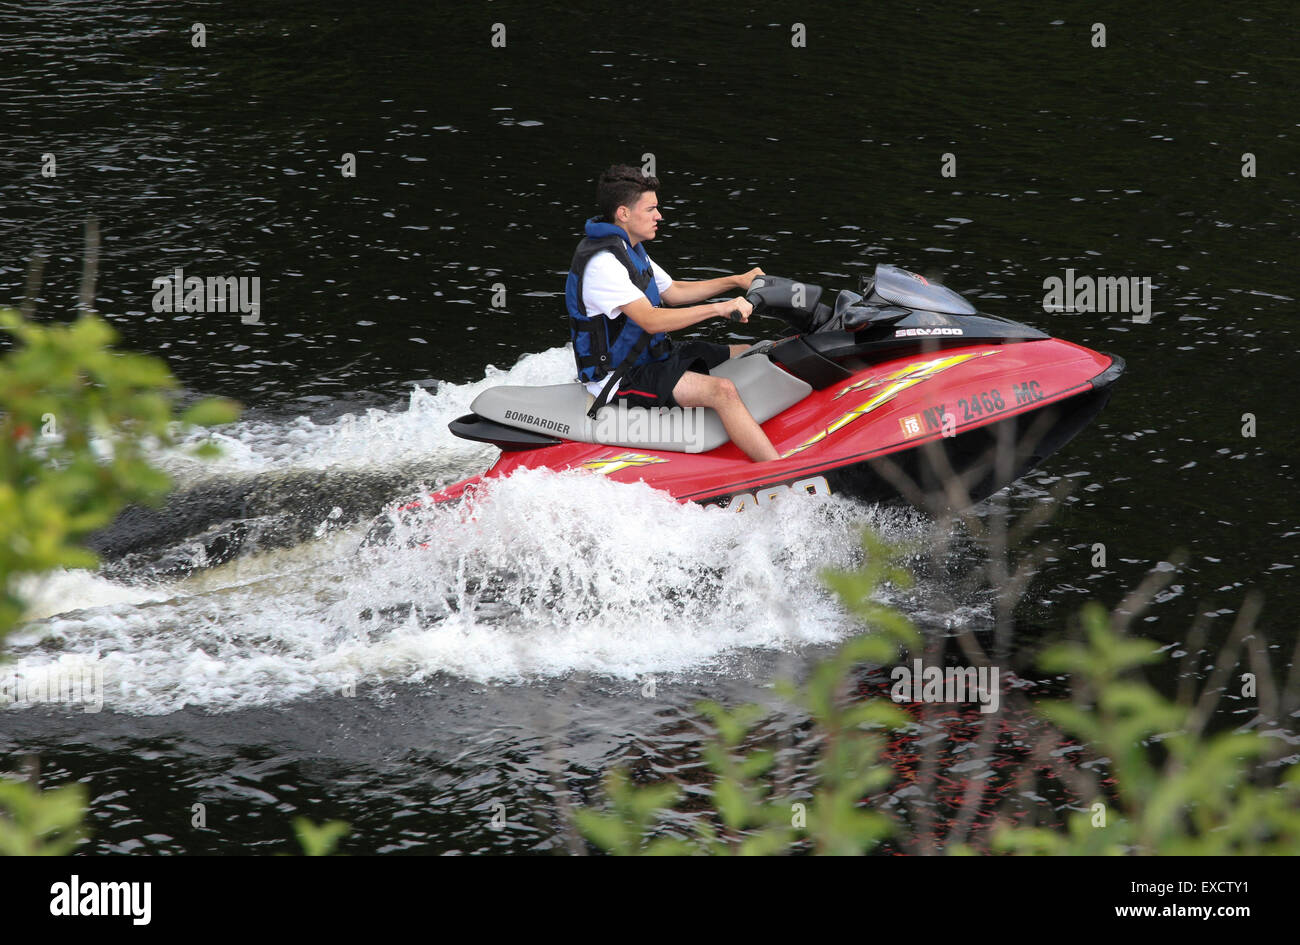 Teenage boy riding a red Sea Doo Bombardier personal watercraft. Long Lake New York Adirondack State park Adirondacks USA US Stock Photo